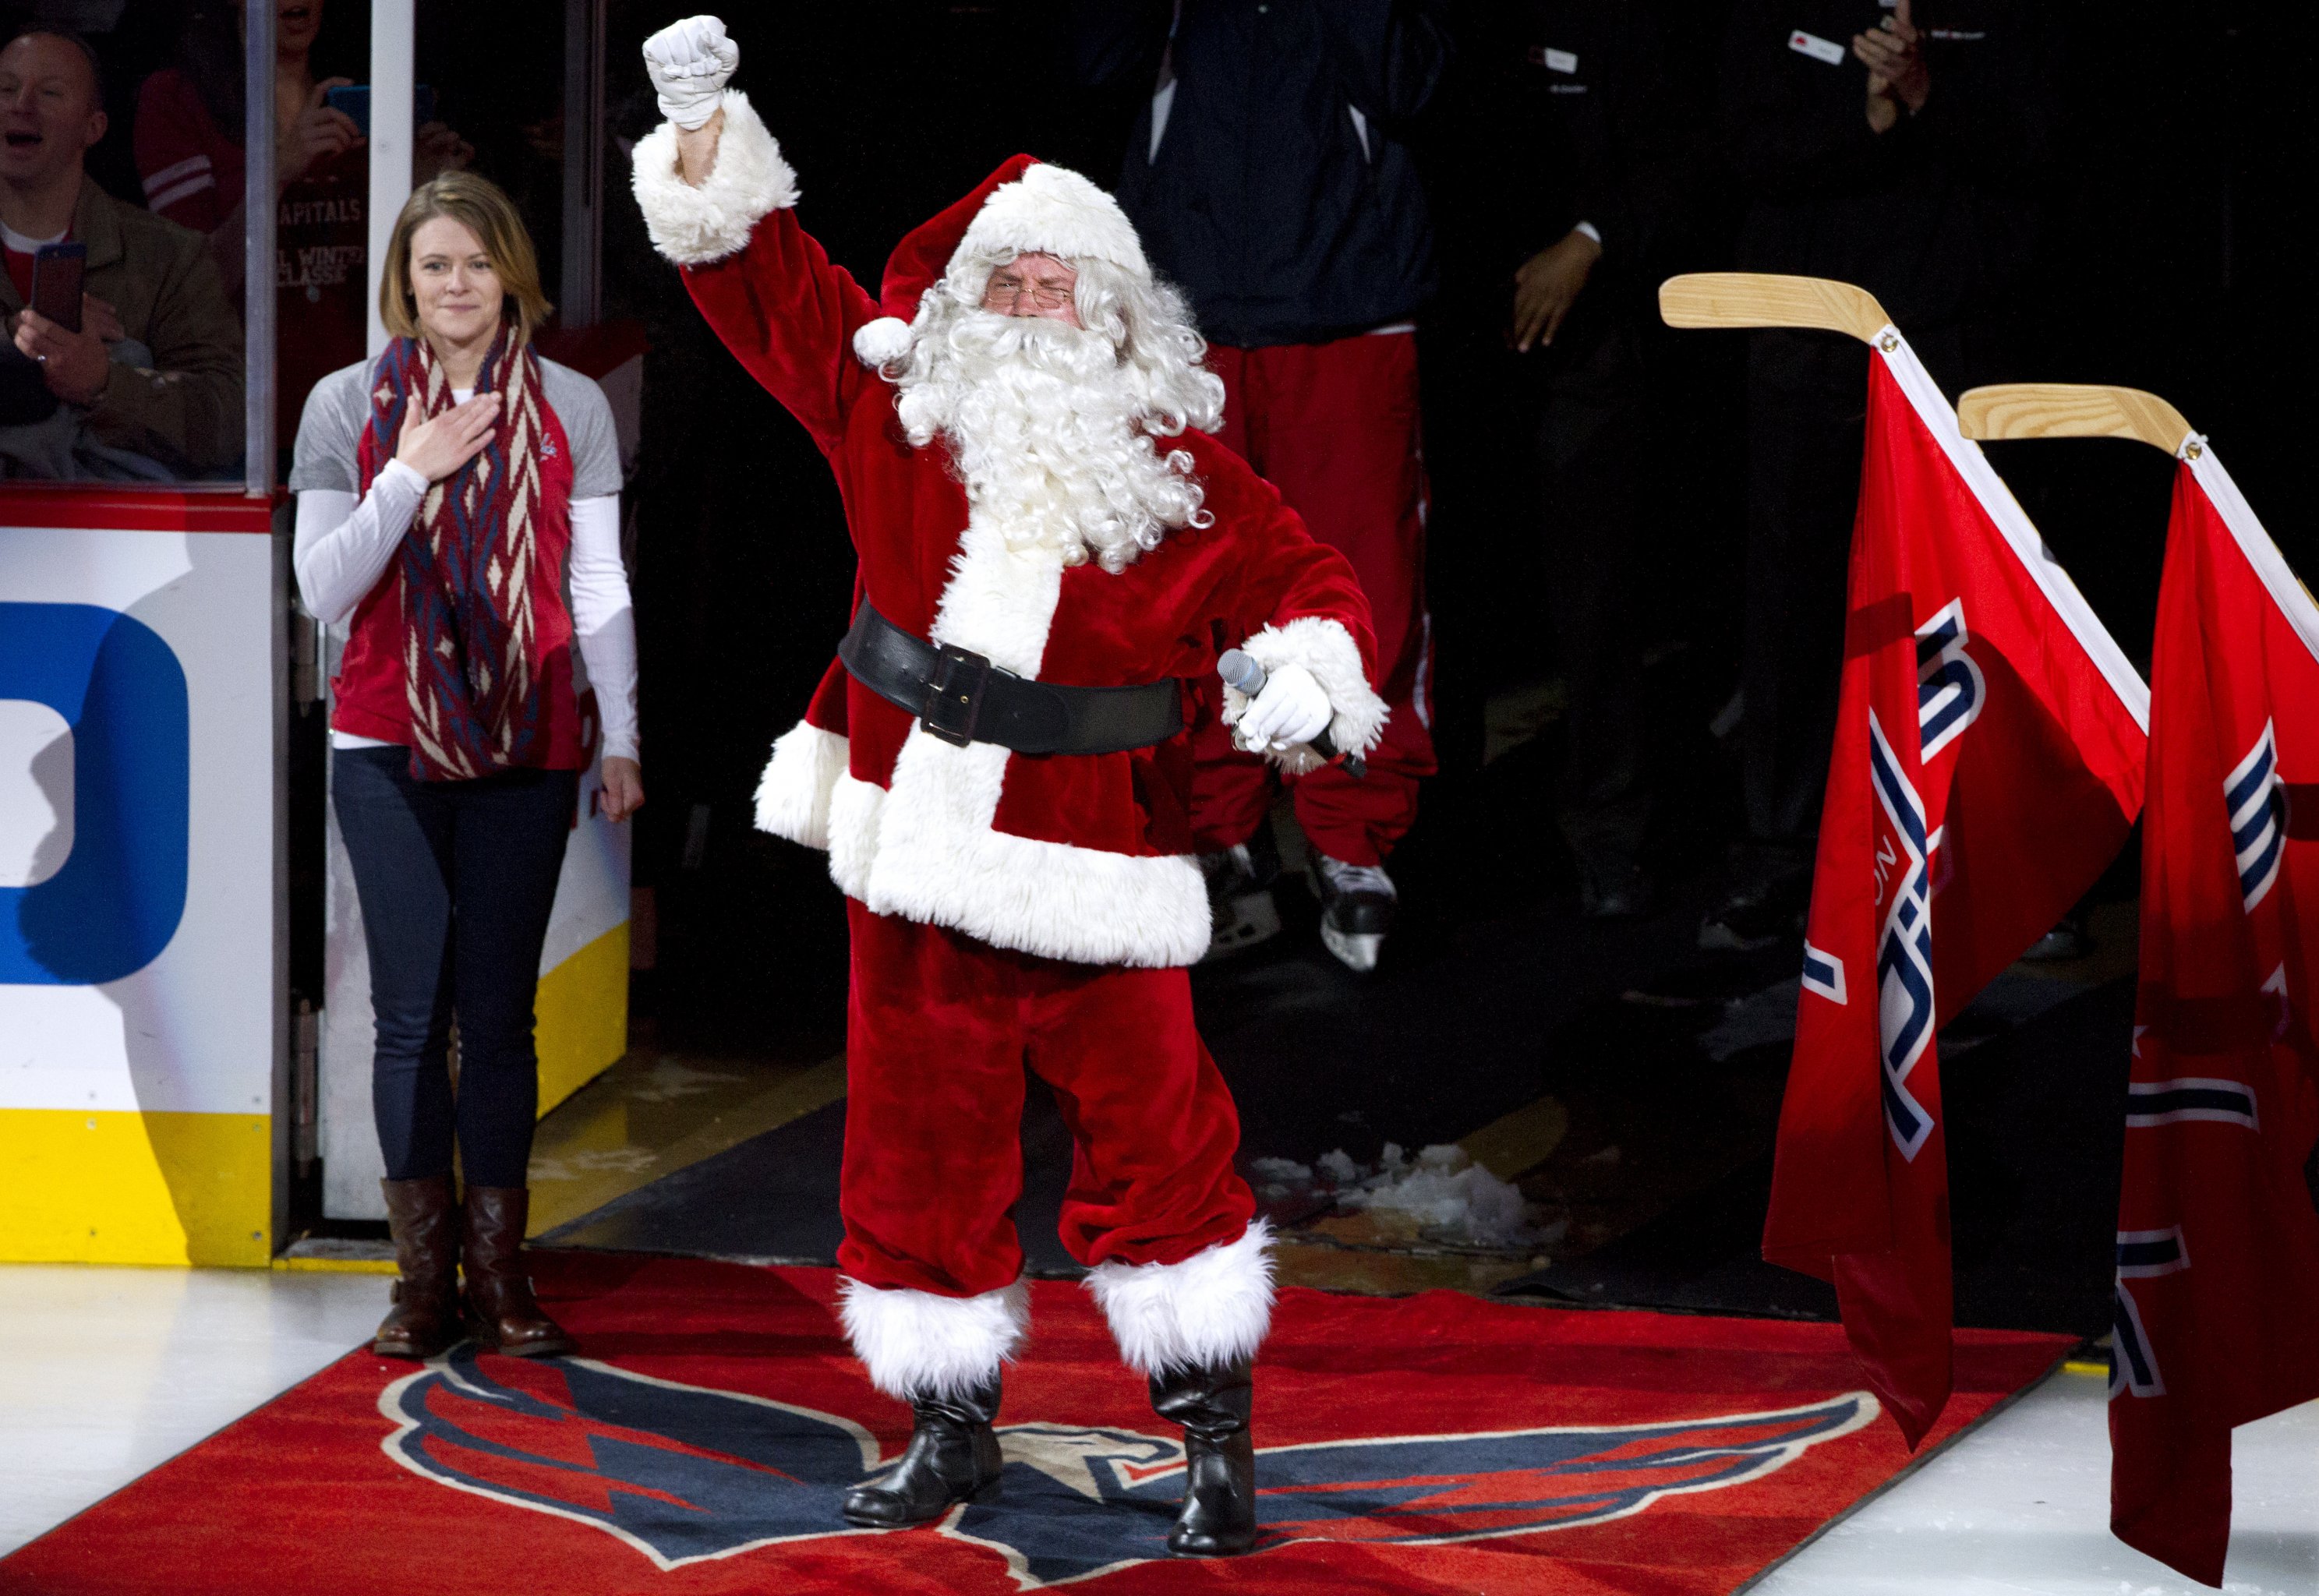 For Fans NHL Buffalo Sabres Christmas Tree And Gift Ugly Christmas